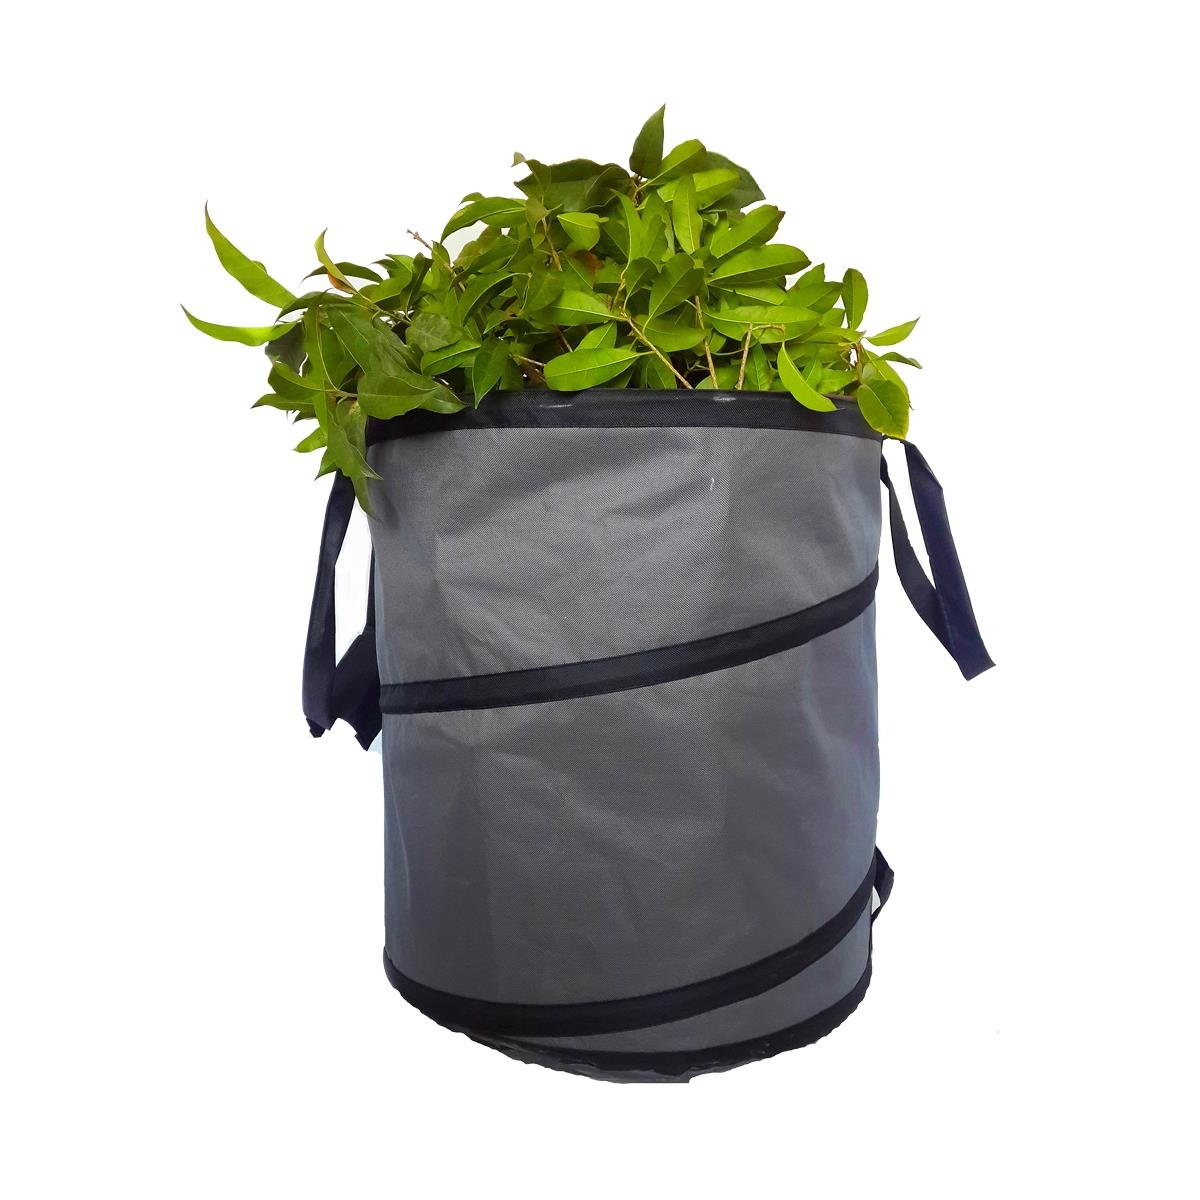 FUXTEC 100L garden waste bags / leaf bags - SET of 3 - FX-GB100